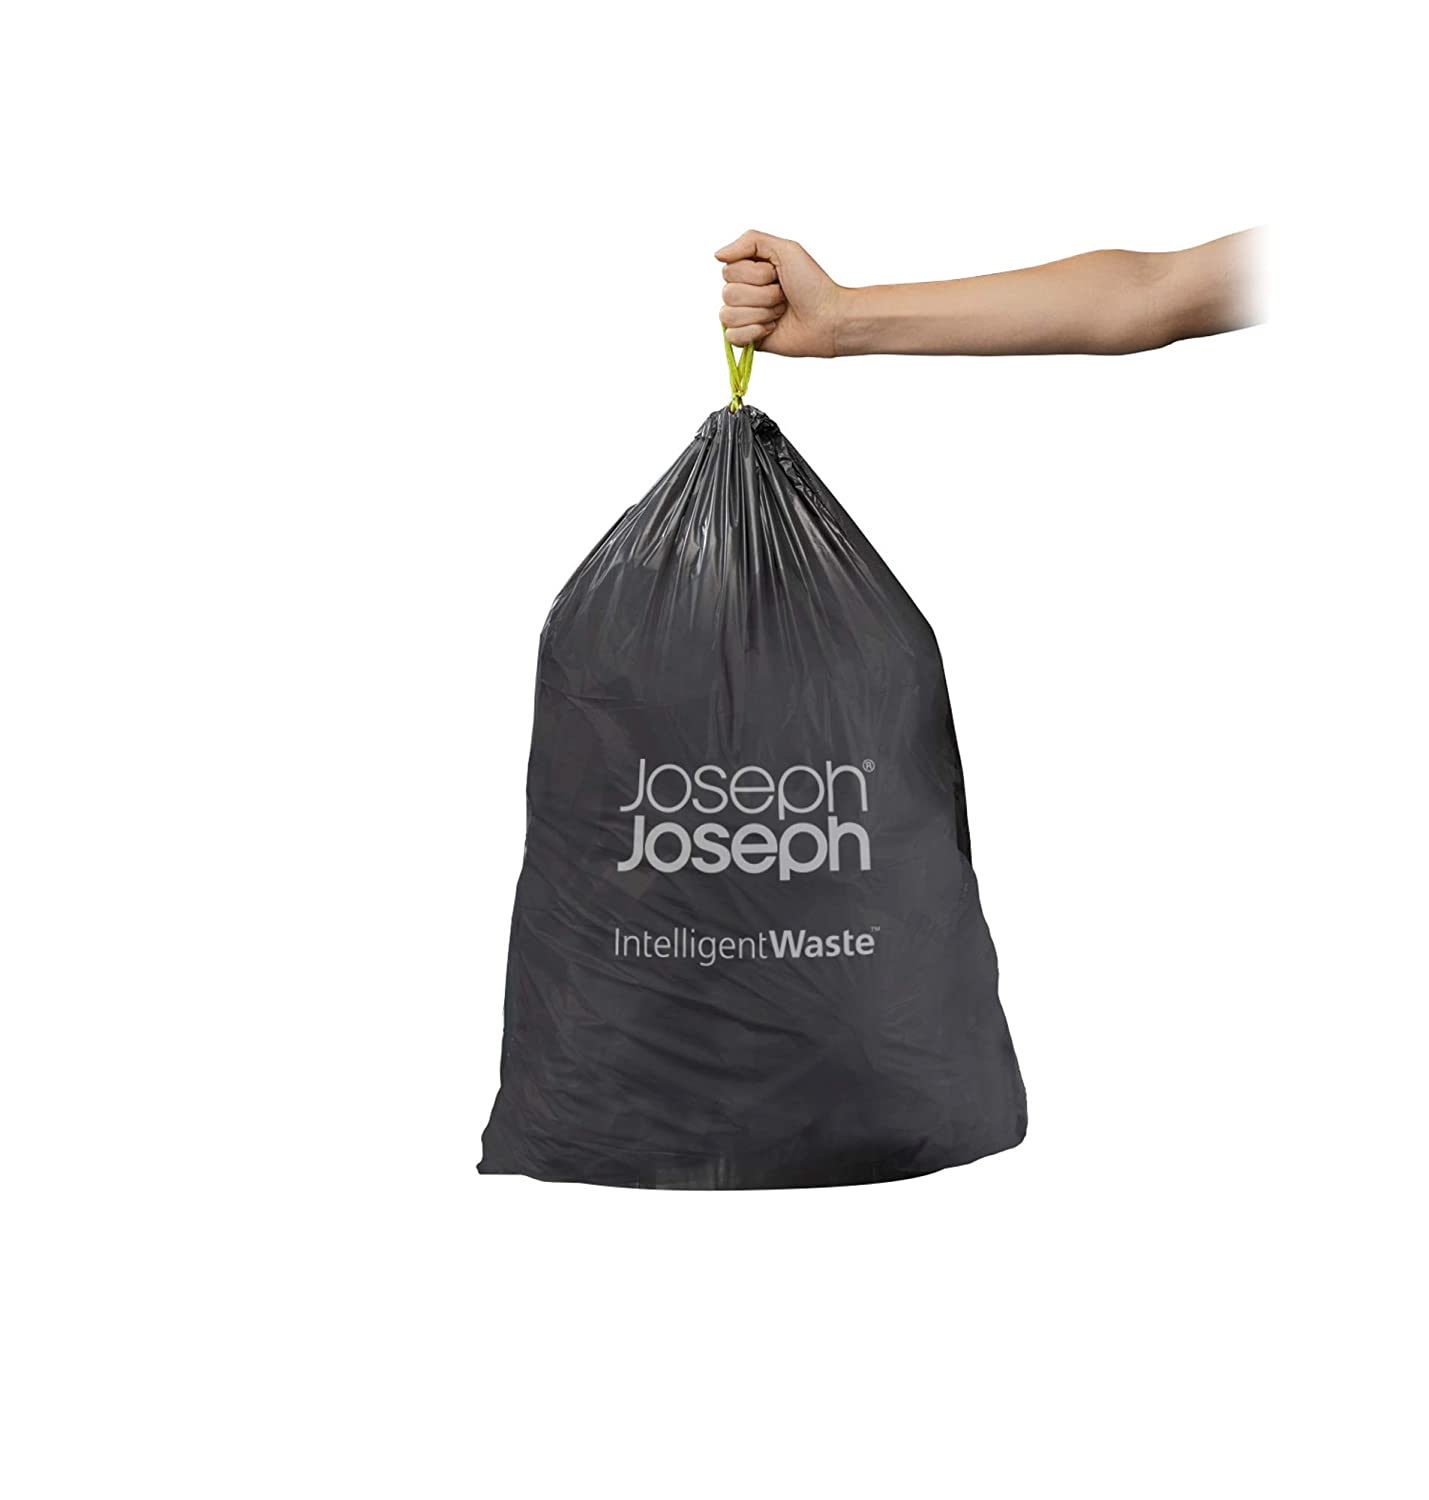 Joseph Joseph Intelligent IW1 General Waste Liners Custom Fit Bags for Totem 24 to 36 Liter/6.3 to 9.5 Gallon, 20-Pack, Black - Hatke